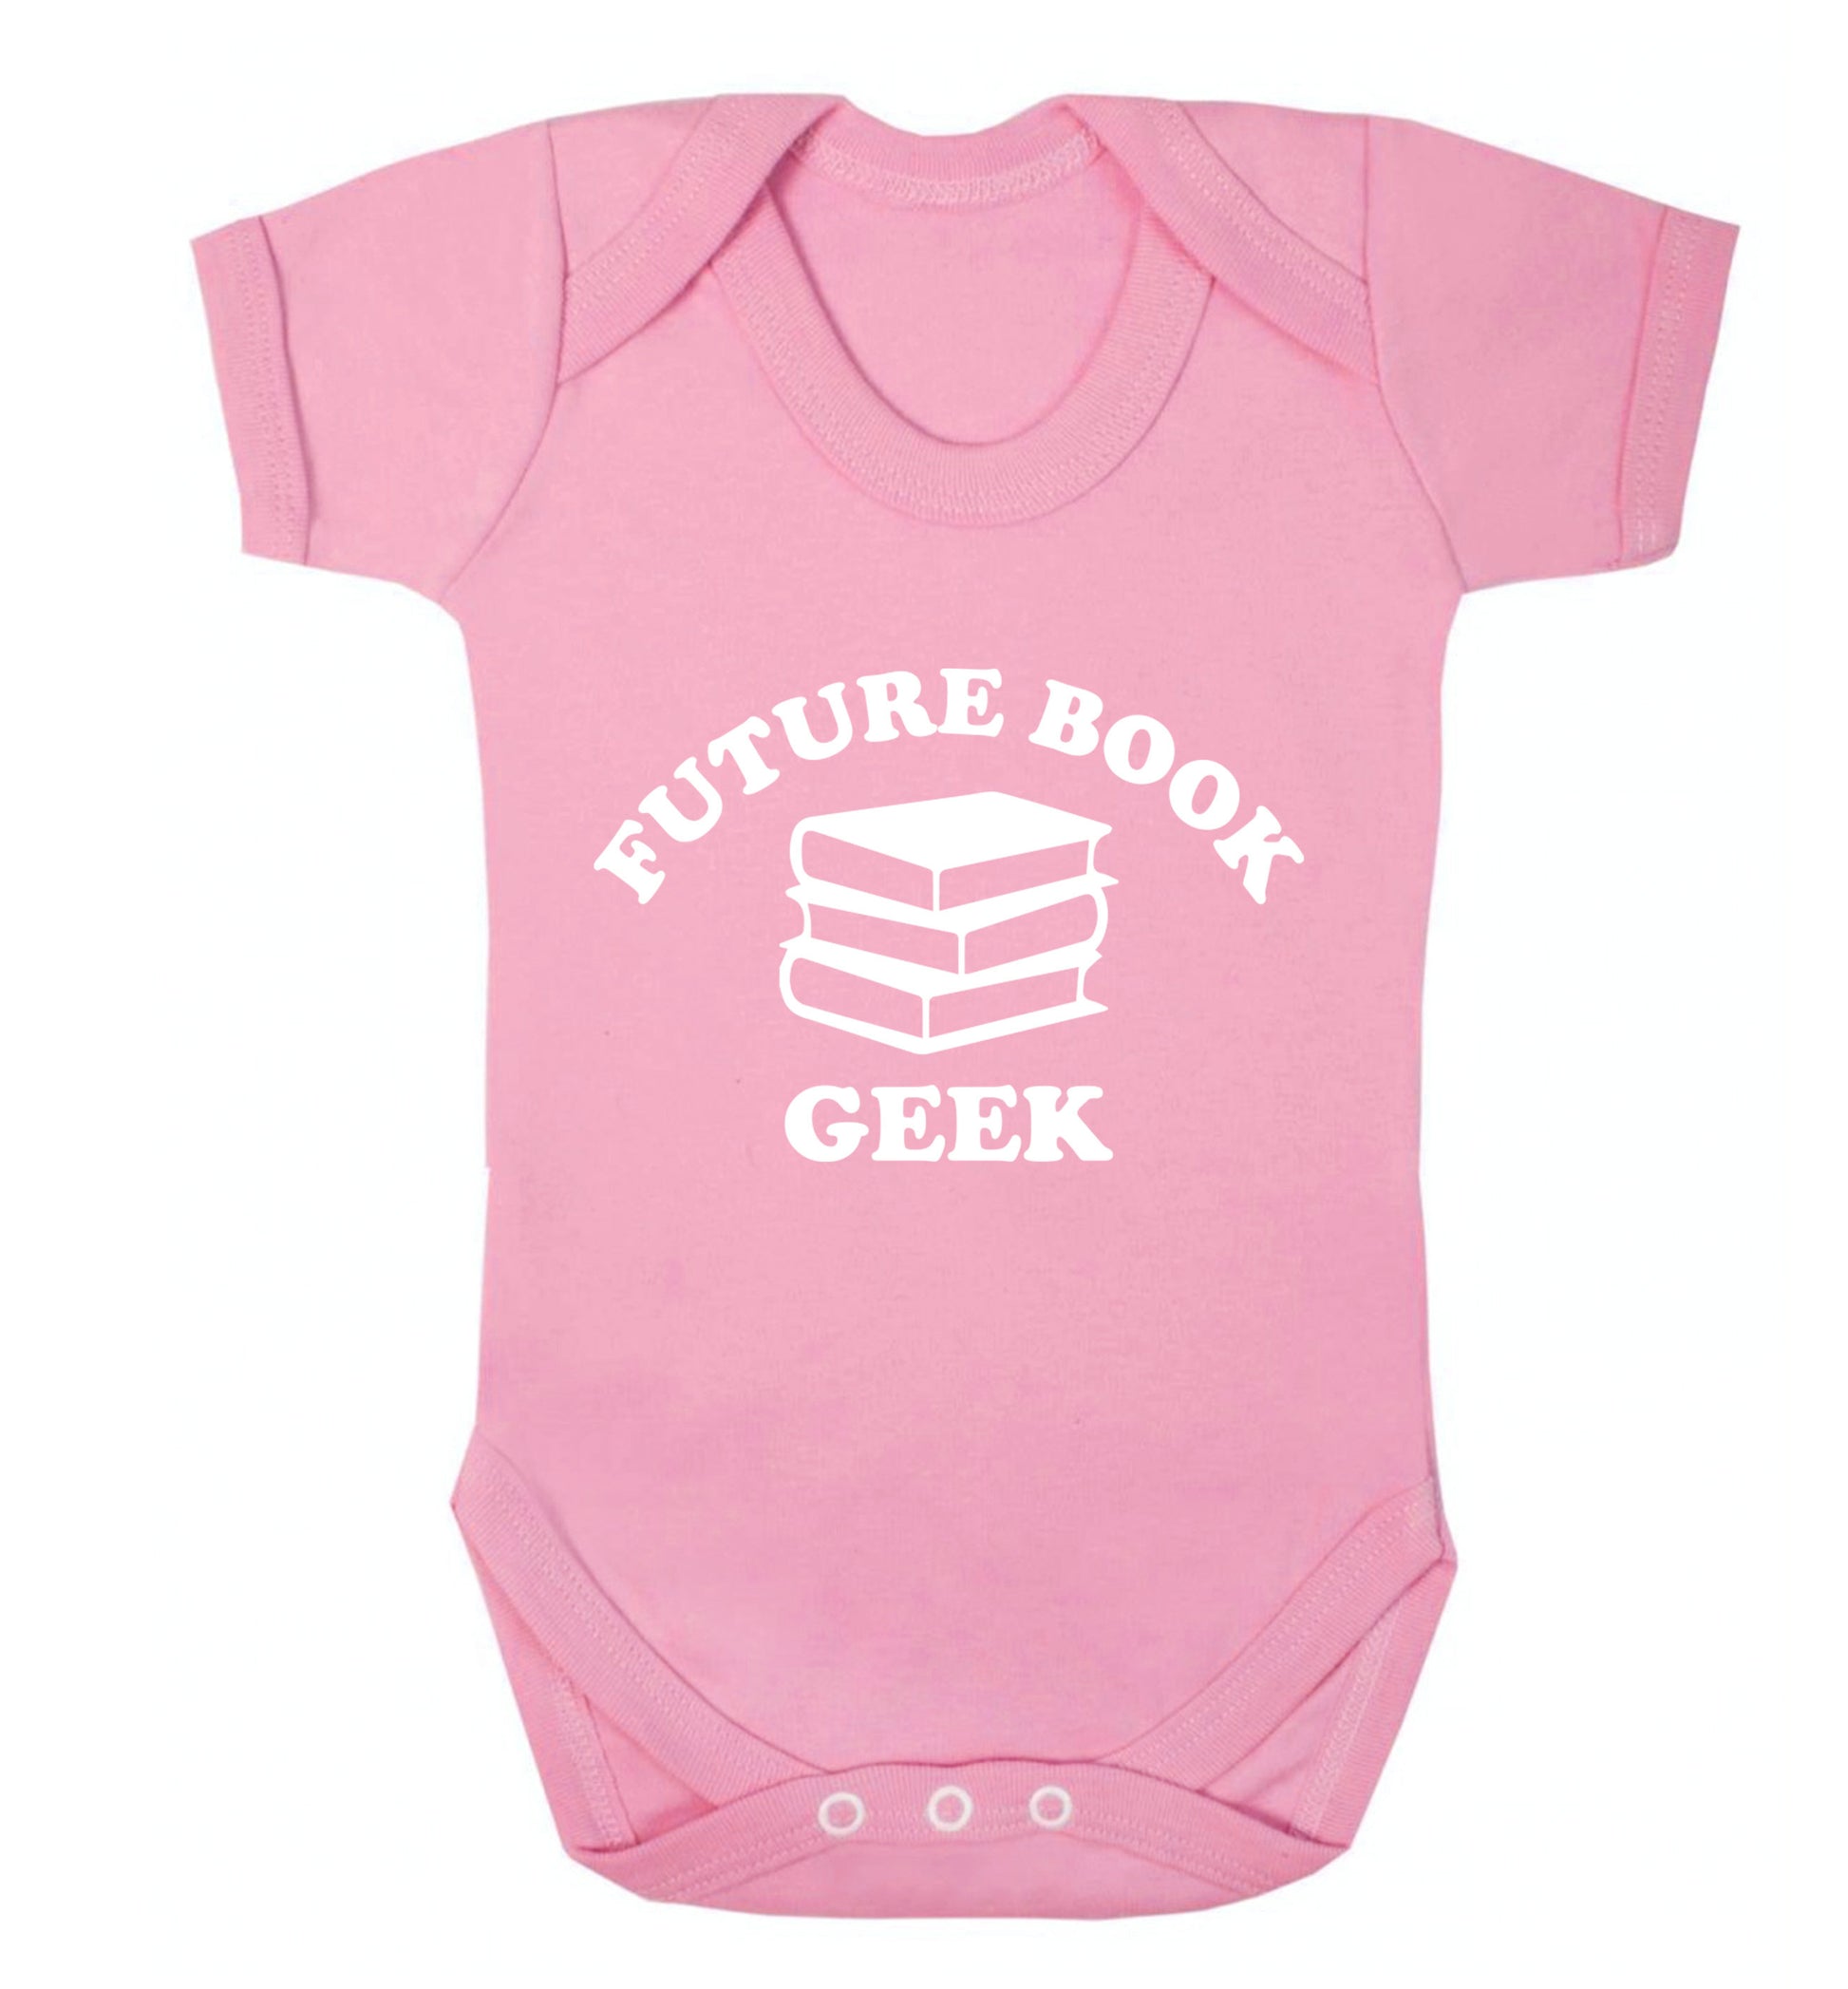 Future book geek Baby Vest pale pink 18-24 months